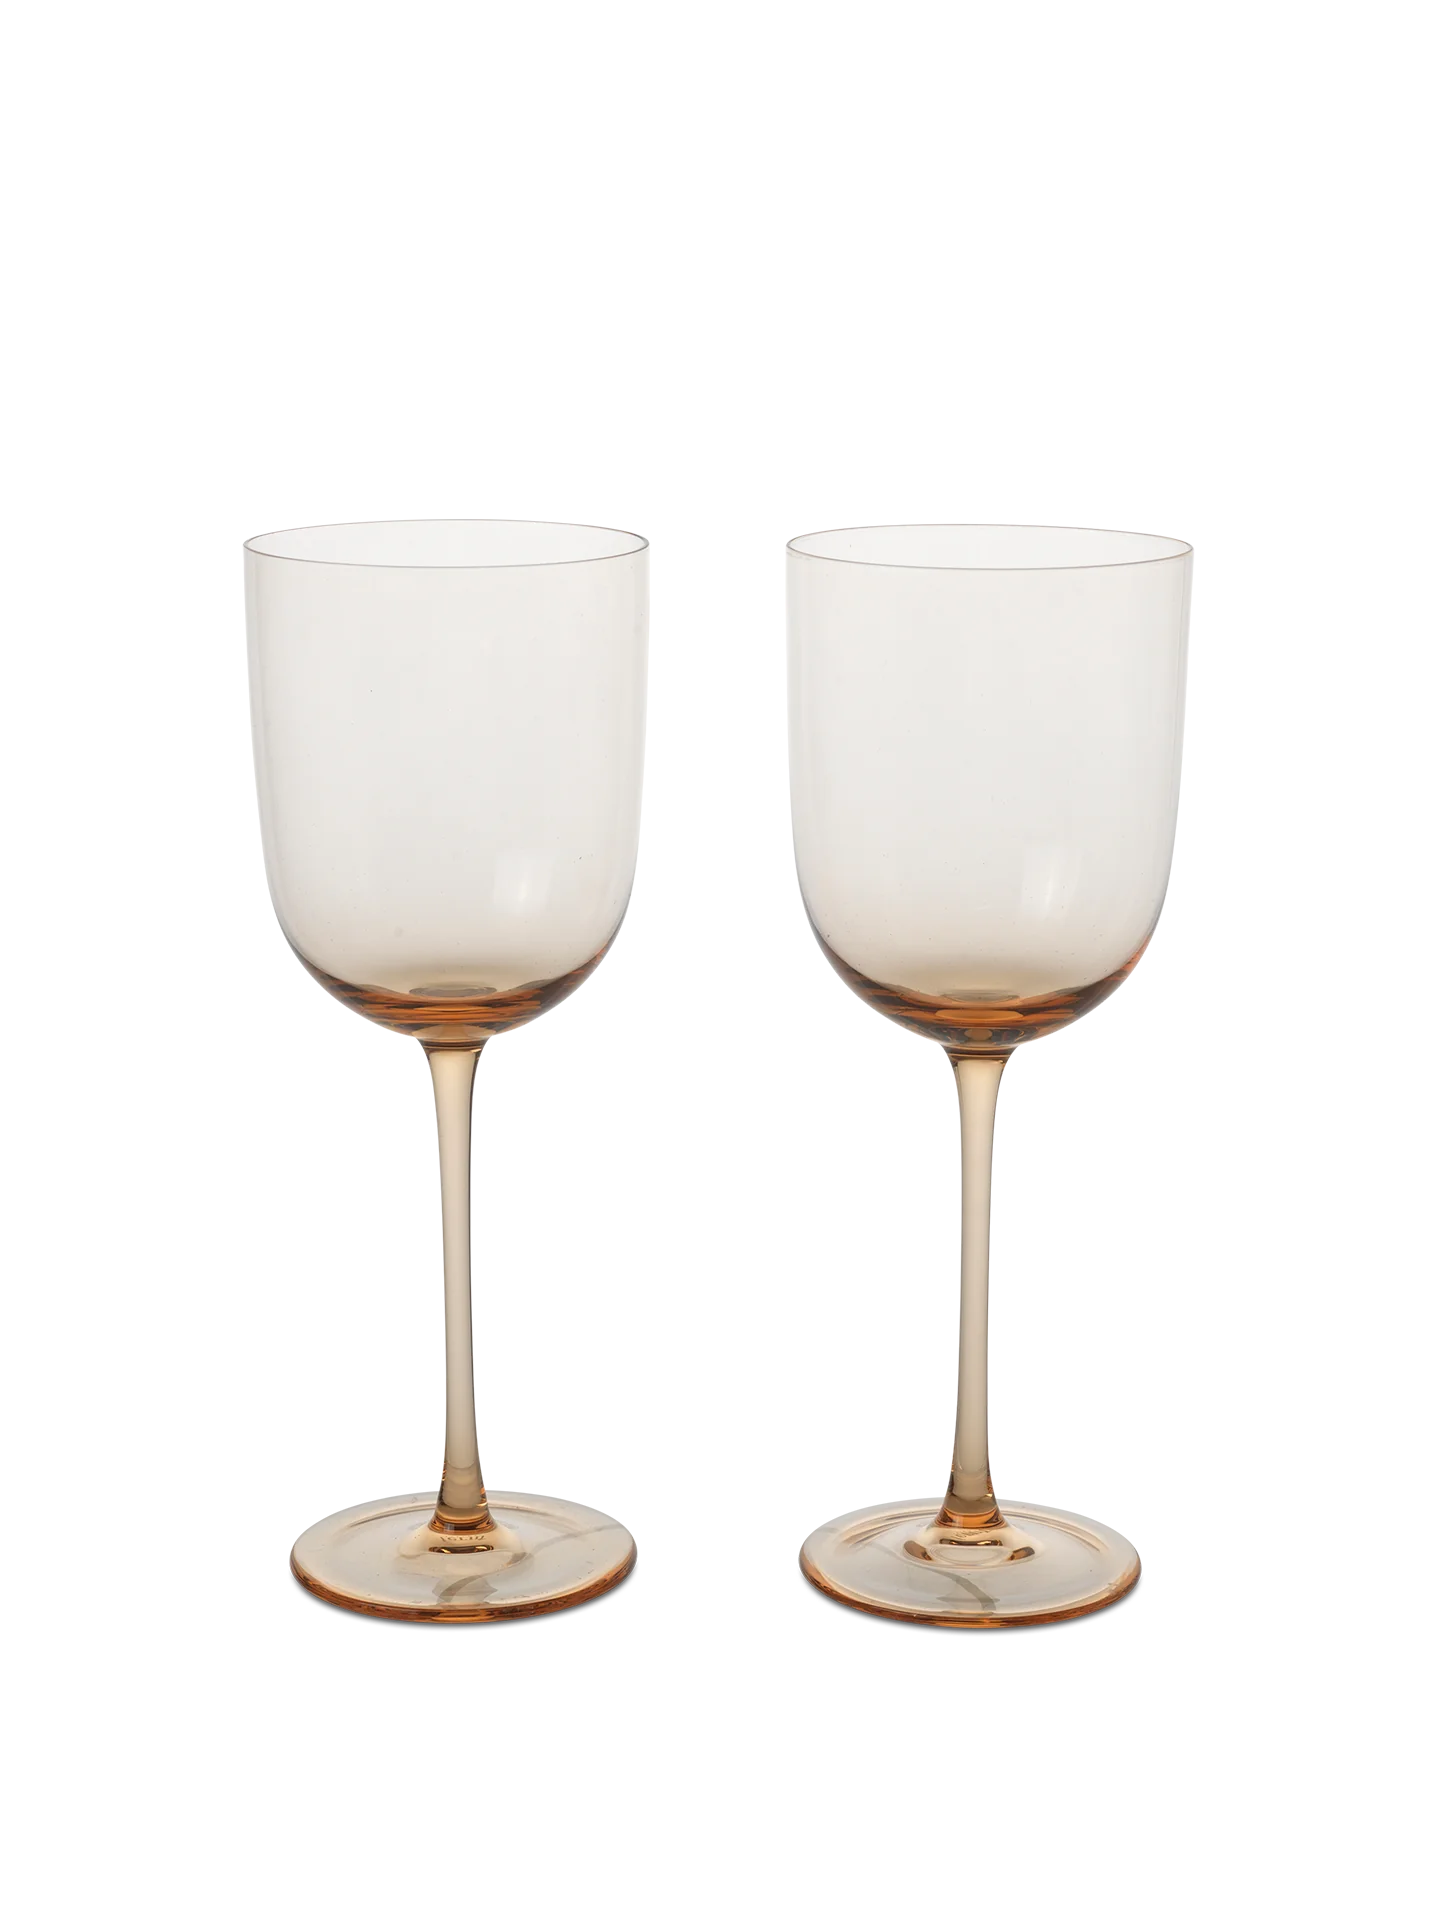 Host Red Wine Glasses - Set of 2